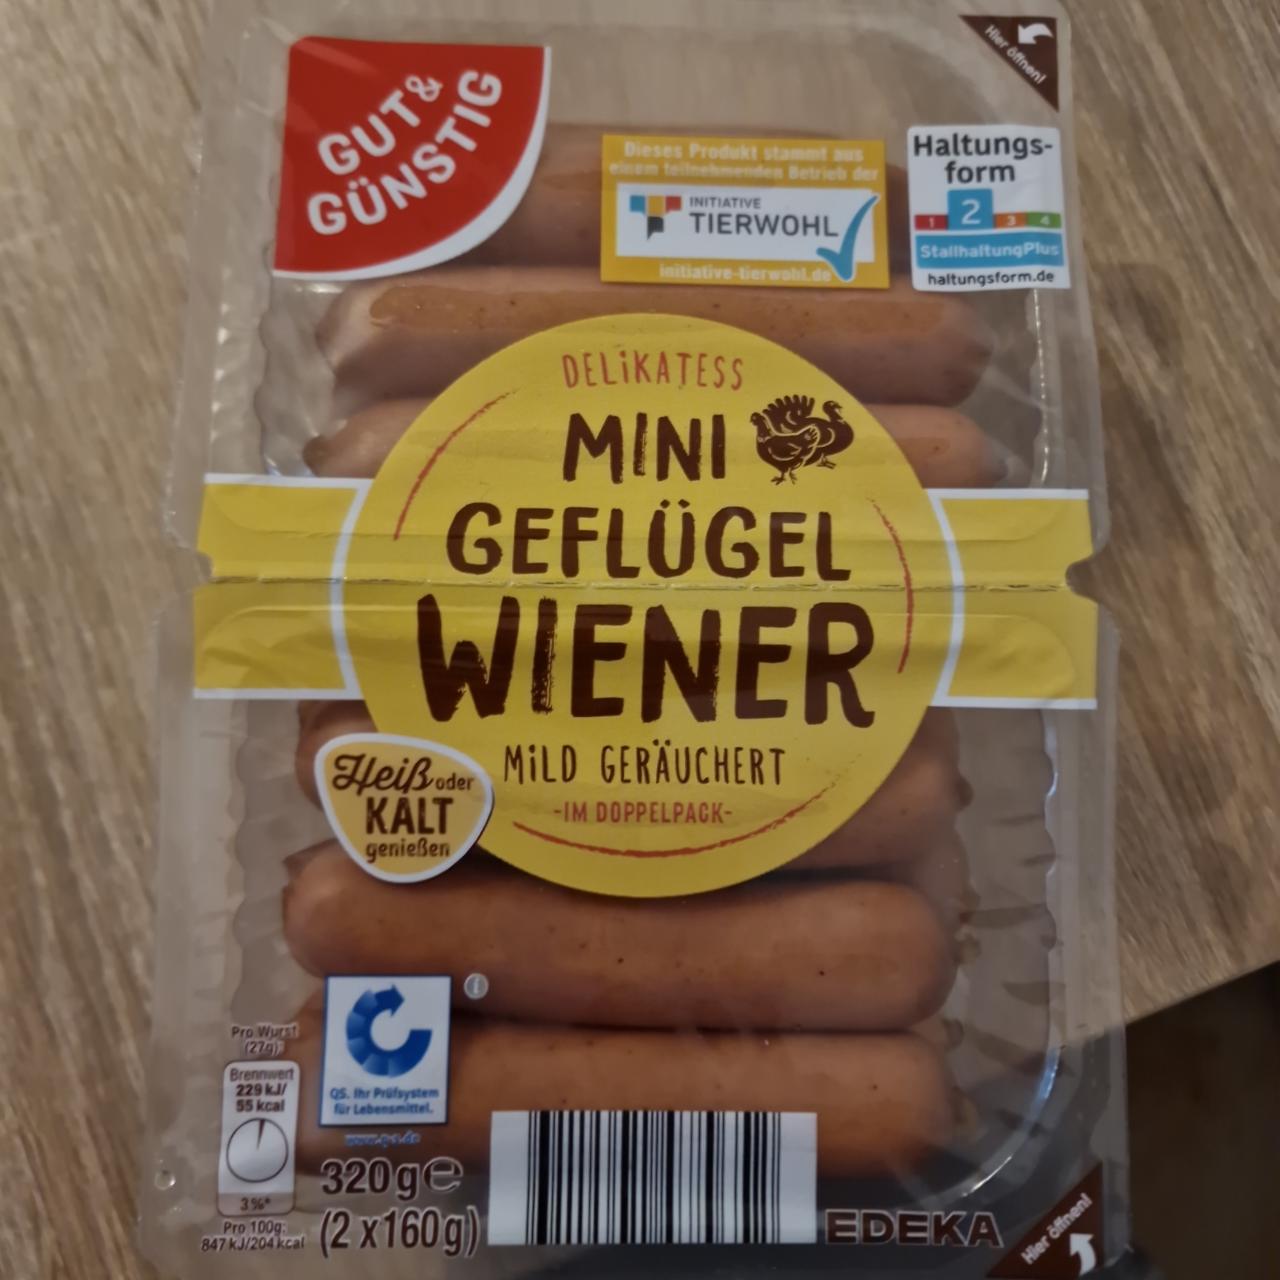 Delikatess Mini geflügel wiener nutričné a kJ - hodnoty Gut&Günstig kalórie